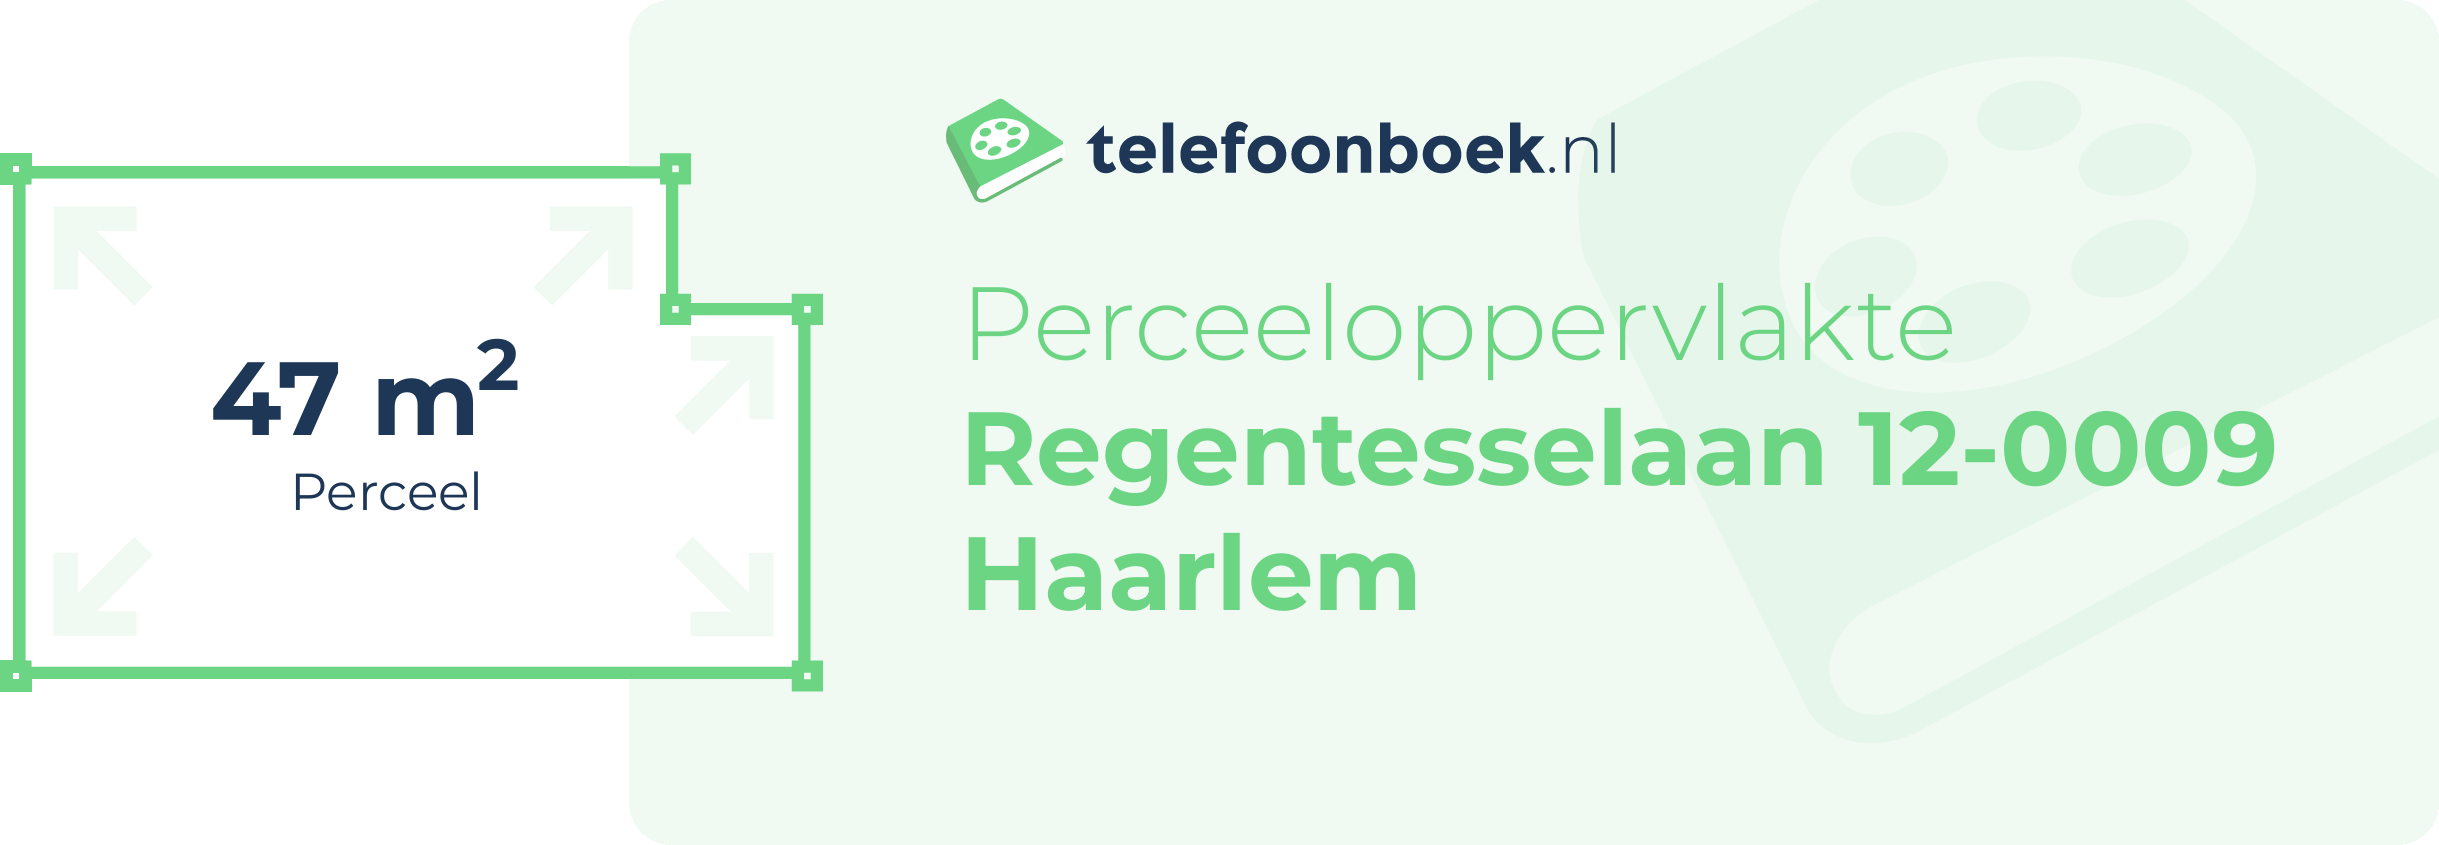 Perceeloppervlakte Regentesselaan 12-0009 Haarlem